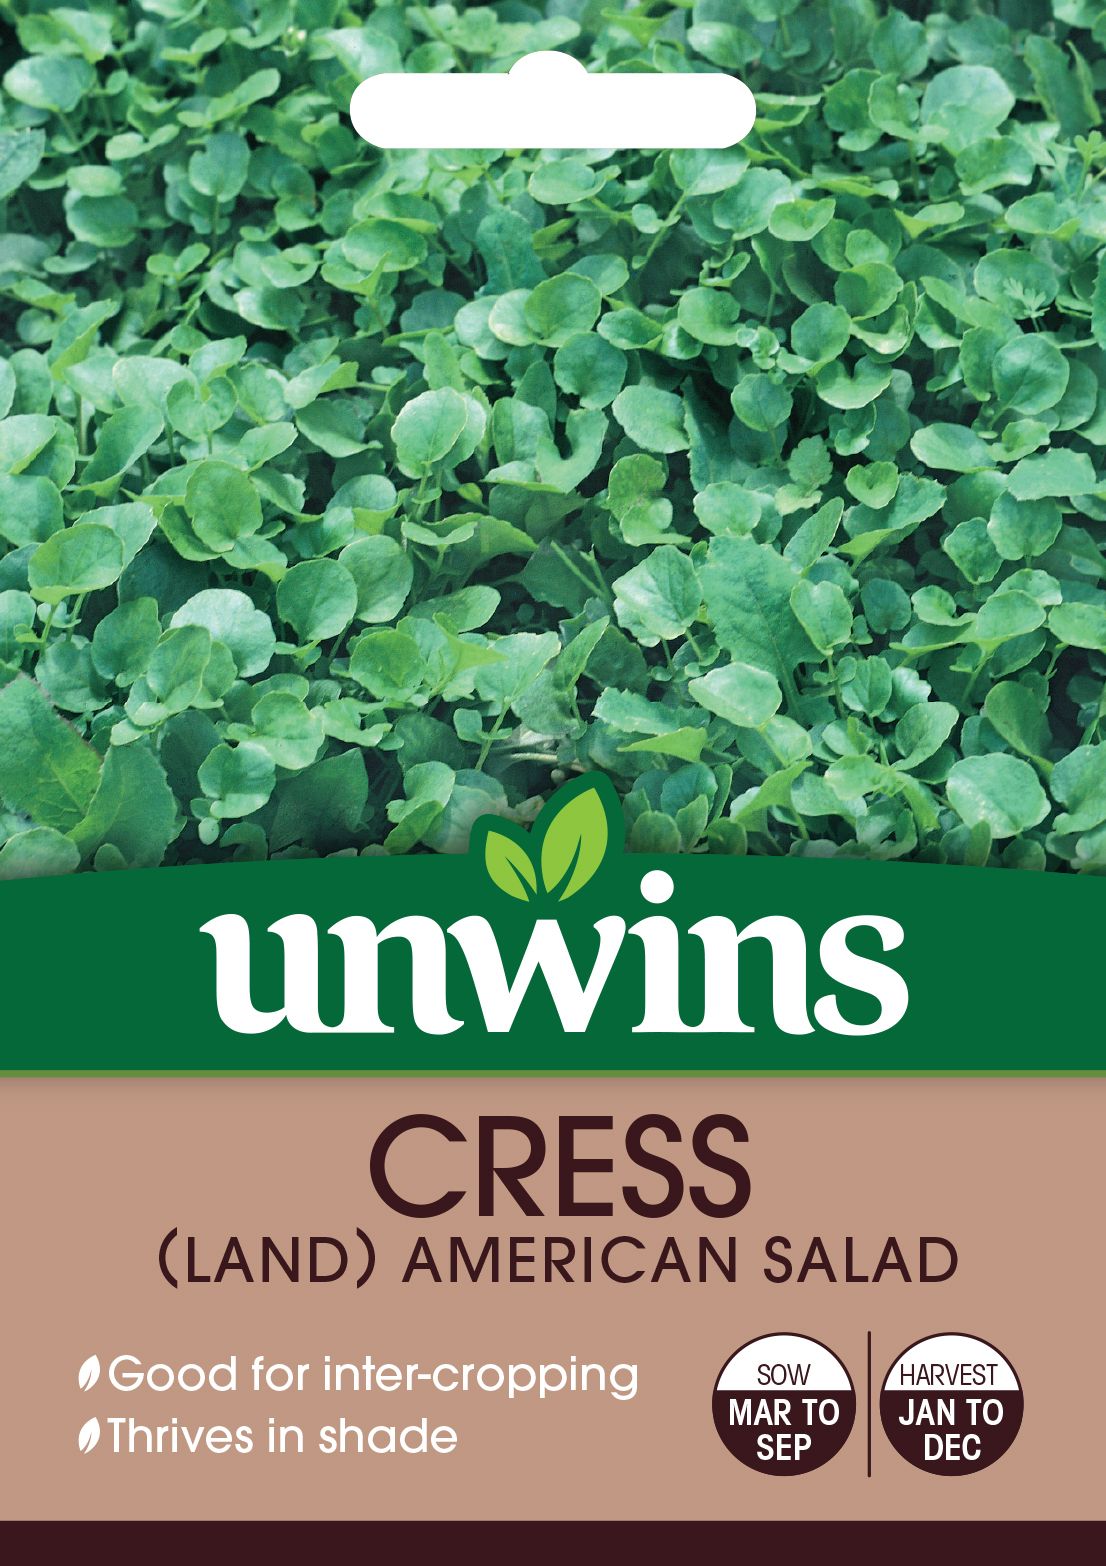 Our Range, Salad Cress